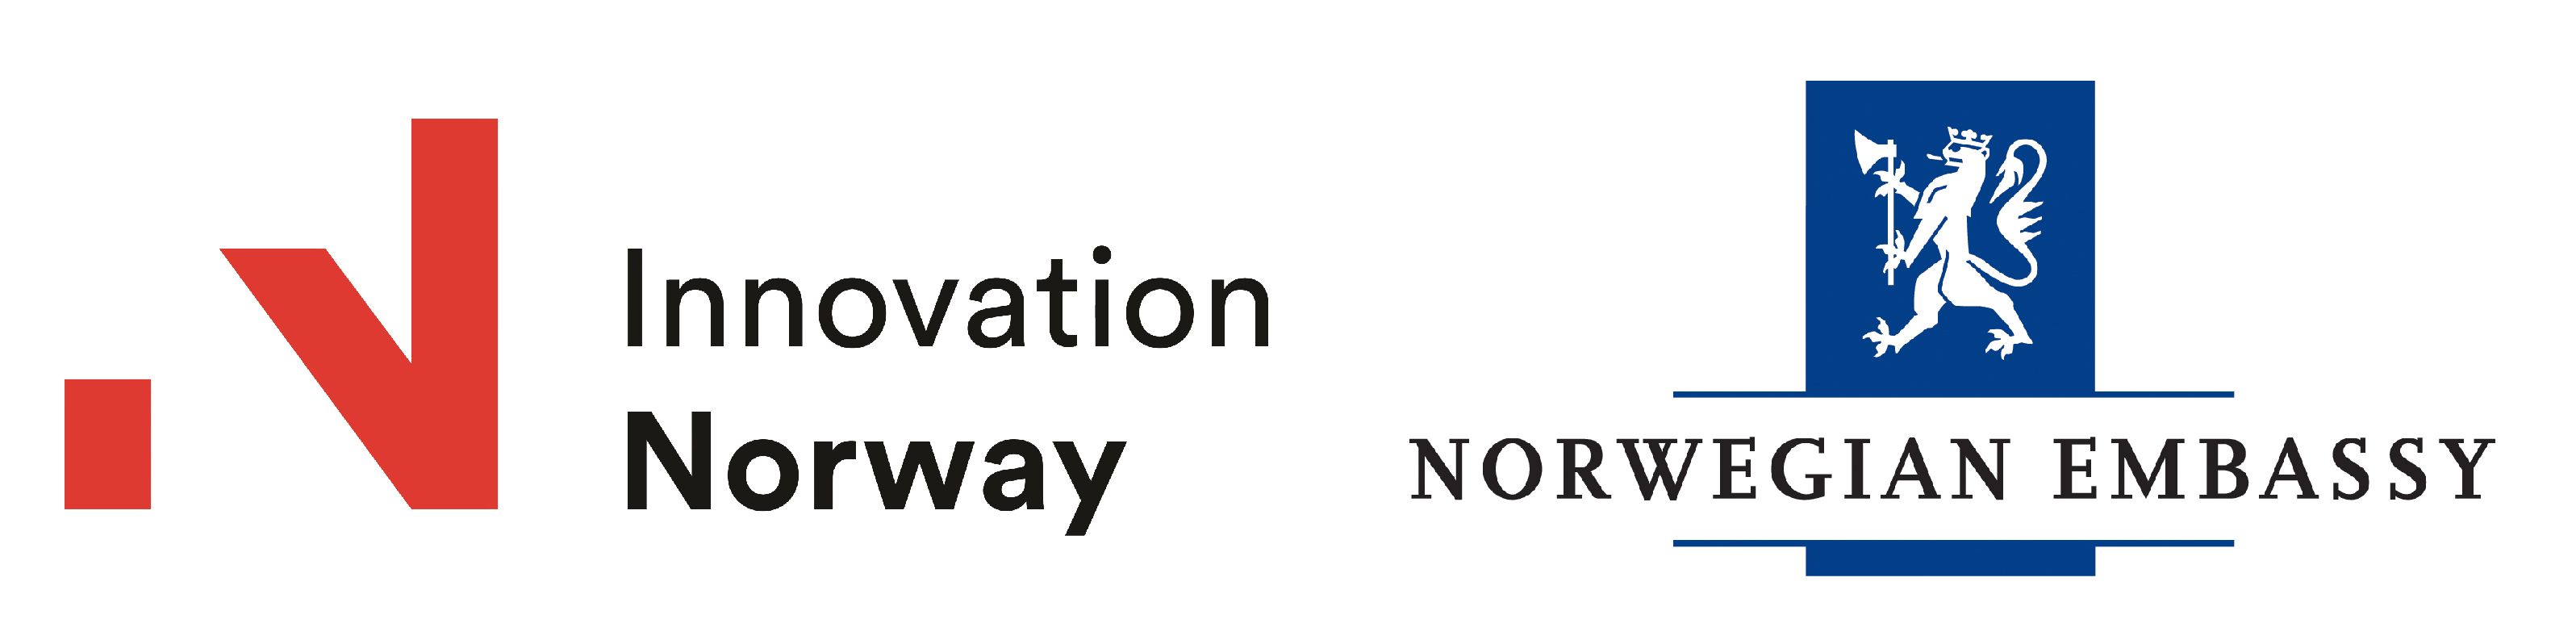 NORWAY-INOVATION-NOWEGIAN-EMBASSY-03f3b28f I + D